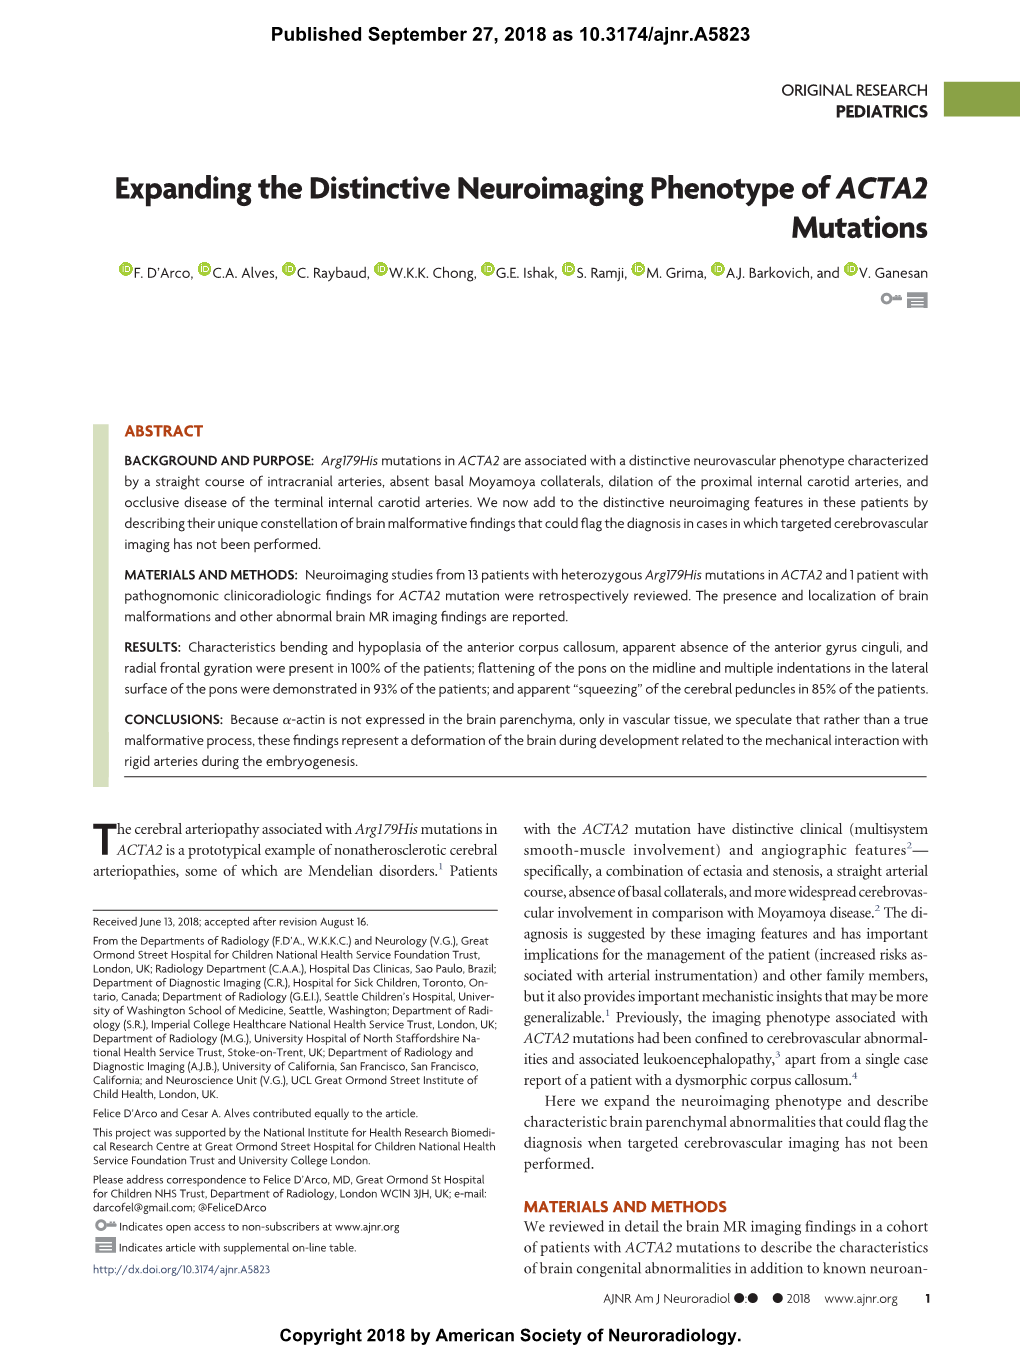 Expanding the Distinctive Neuroimaging Phenotype of ACTA2 Mutations